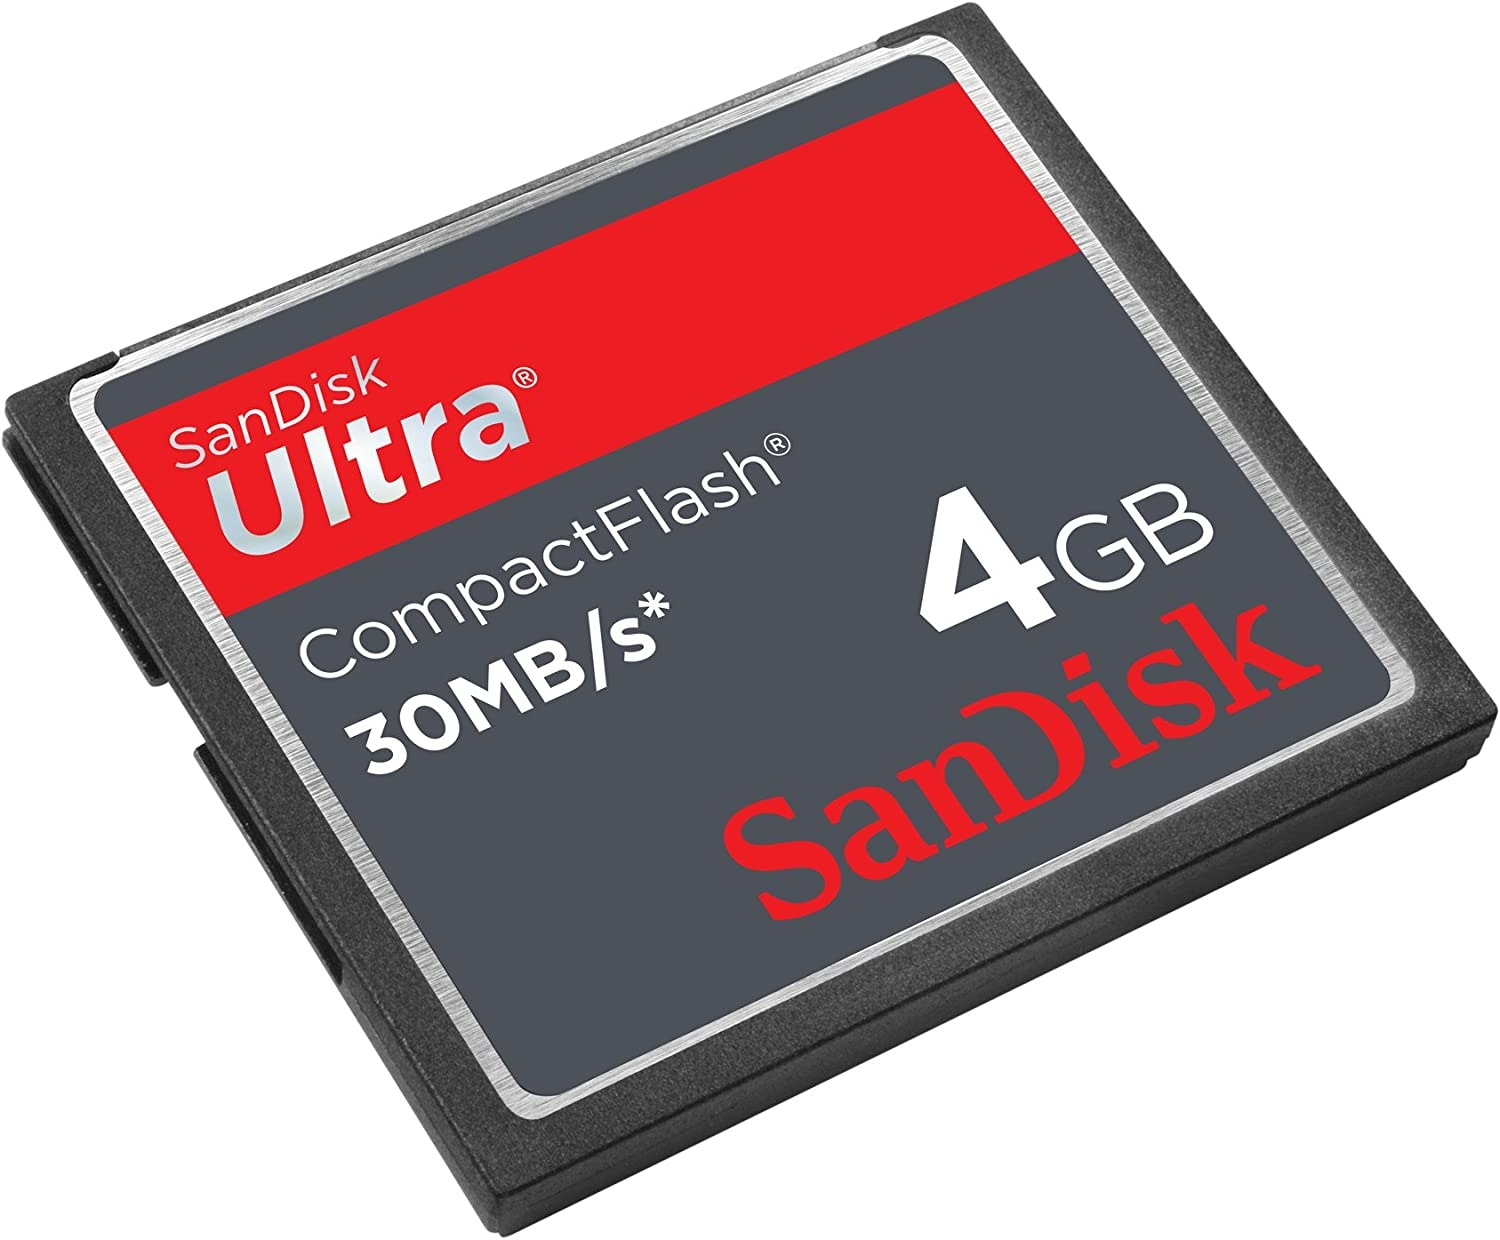 SanDisk Ultra CompactFlash 4 GB Memory Card-1